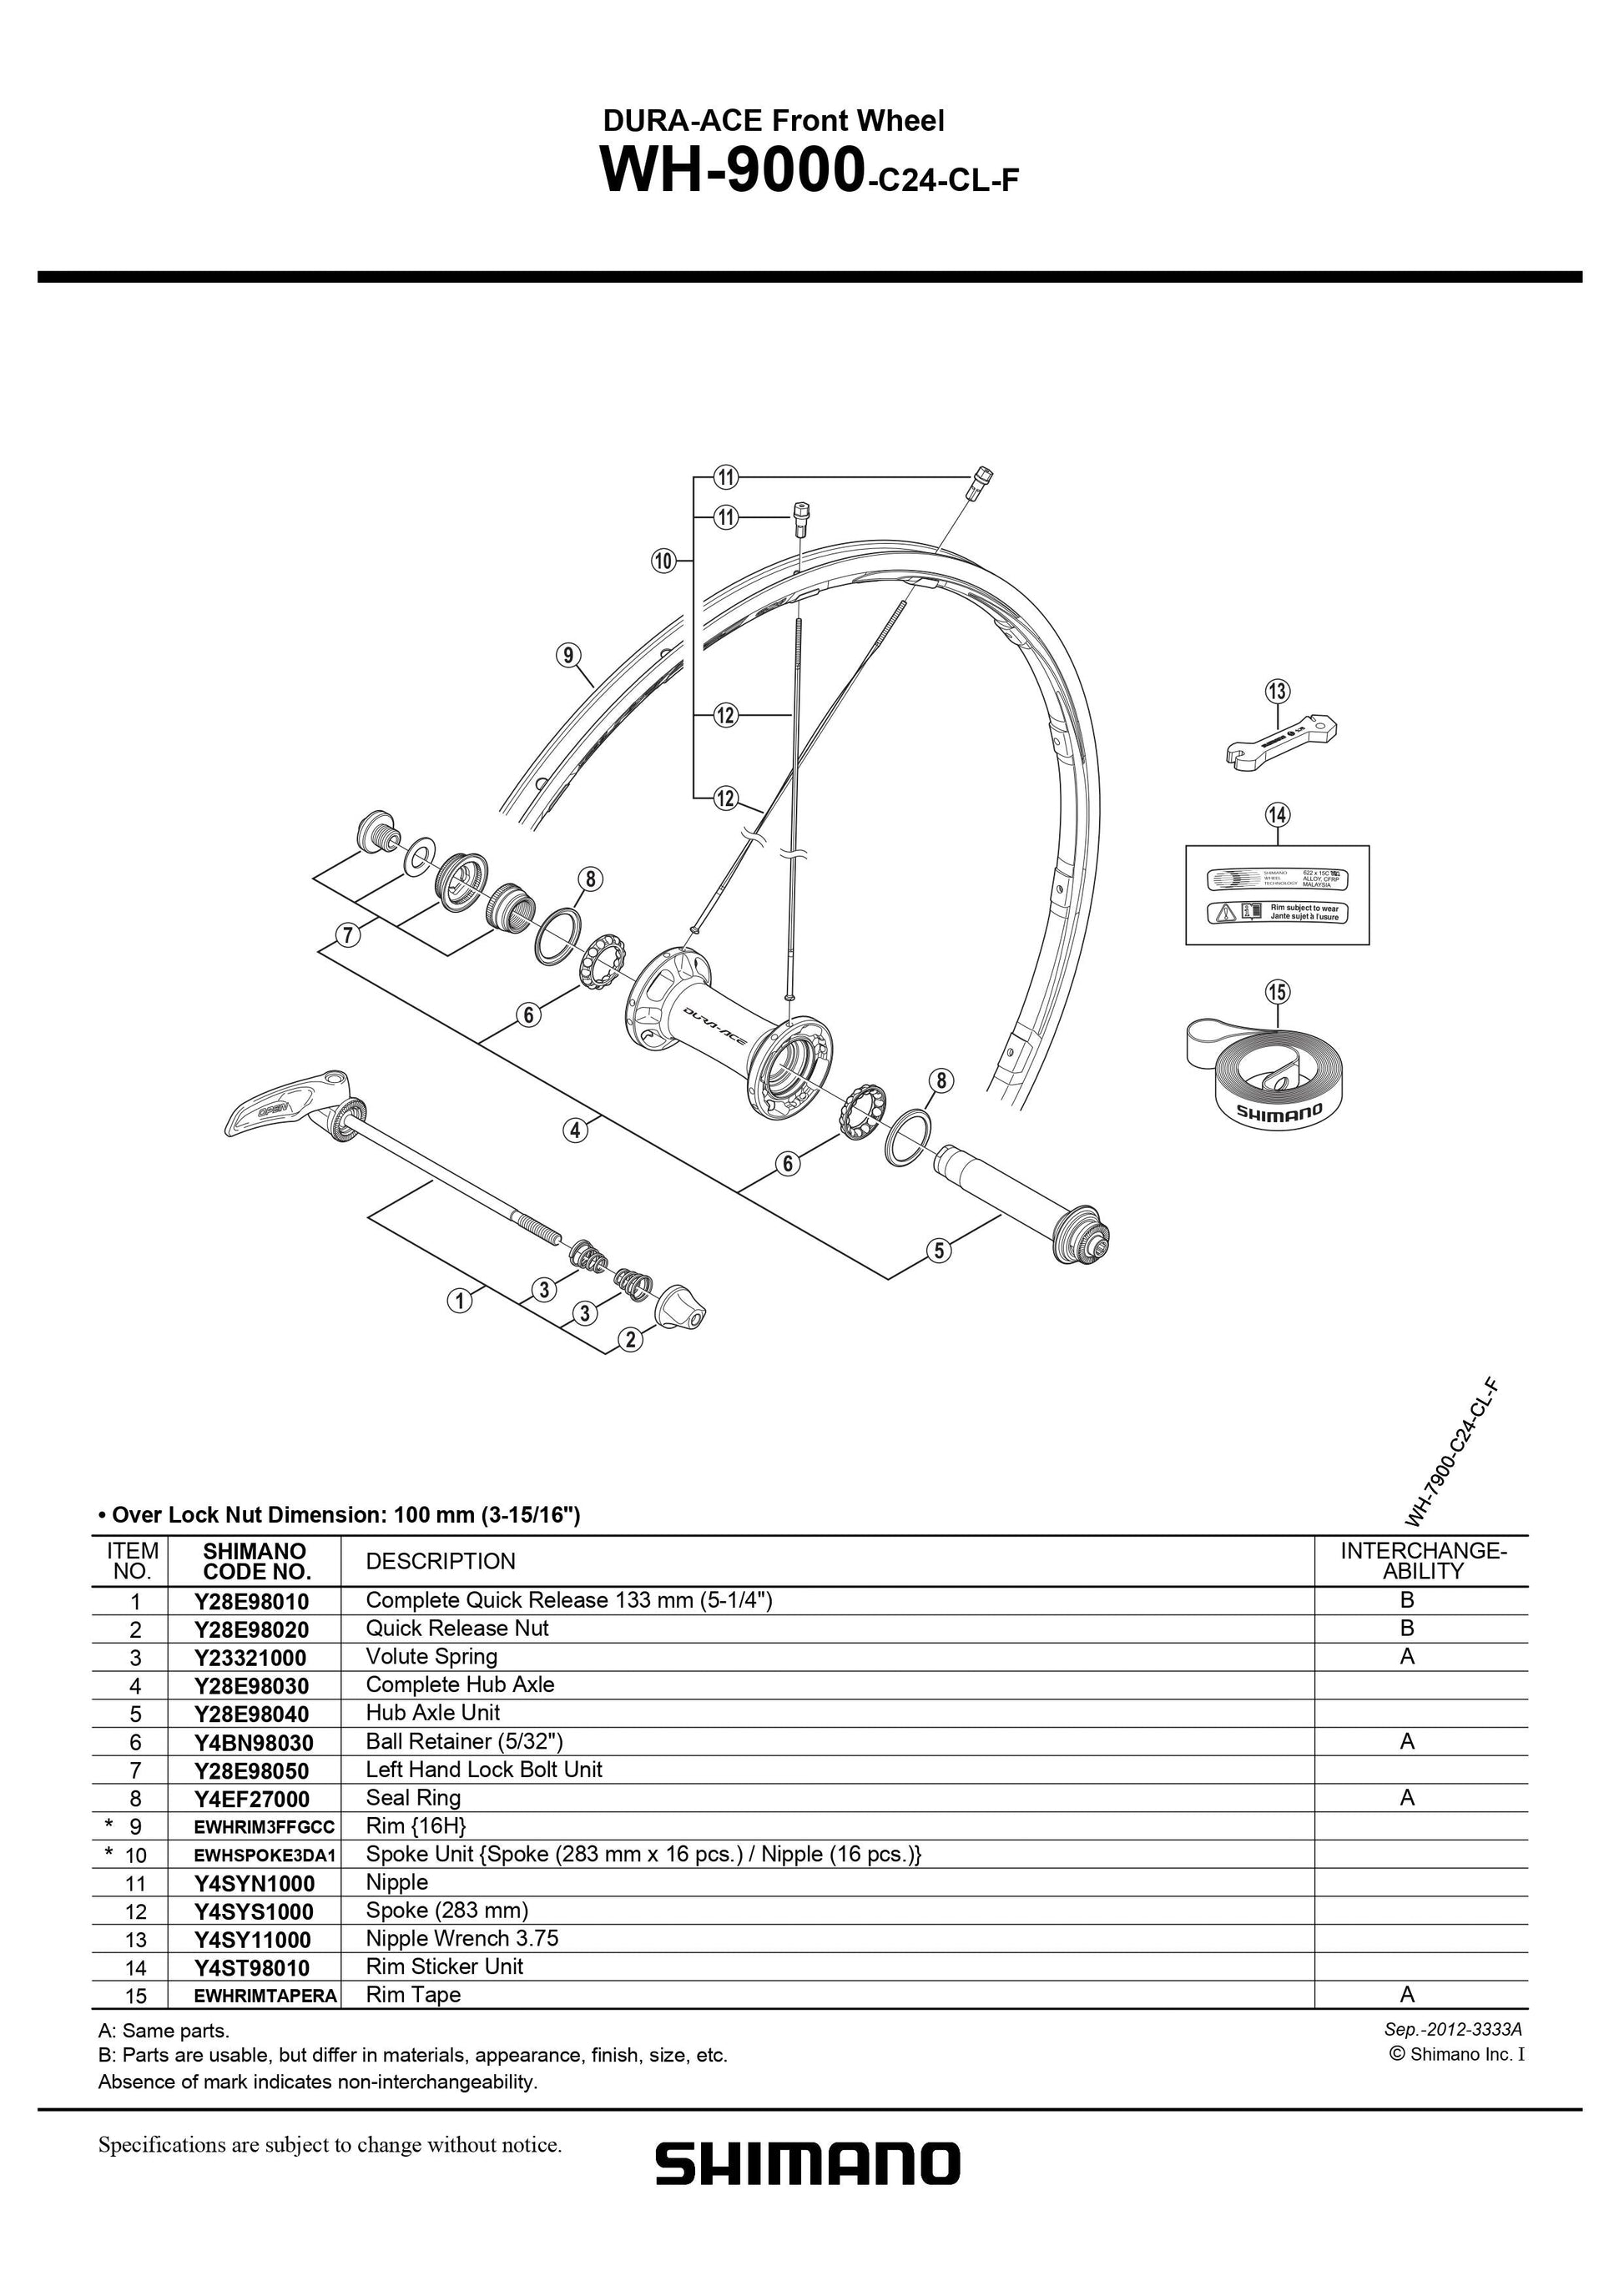 SHIMANO DURA-ACE WH-9000-C24-CL-F Front Wheel Spoke Kit 283mm x 16 pcs. Nipple 16 pcs. - EWHSPOKE3DA1-Pit Crew Cycles